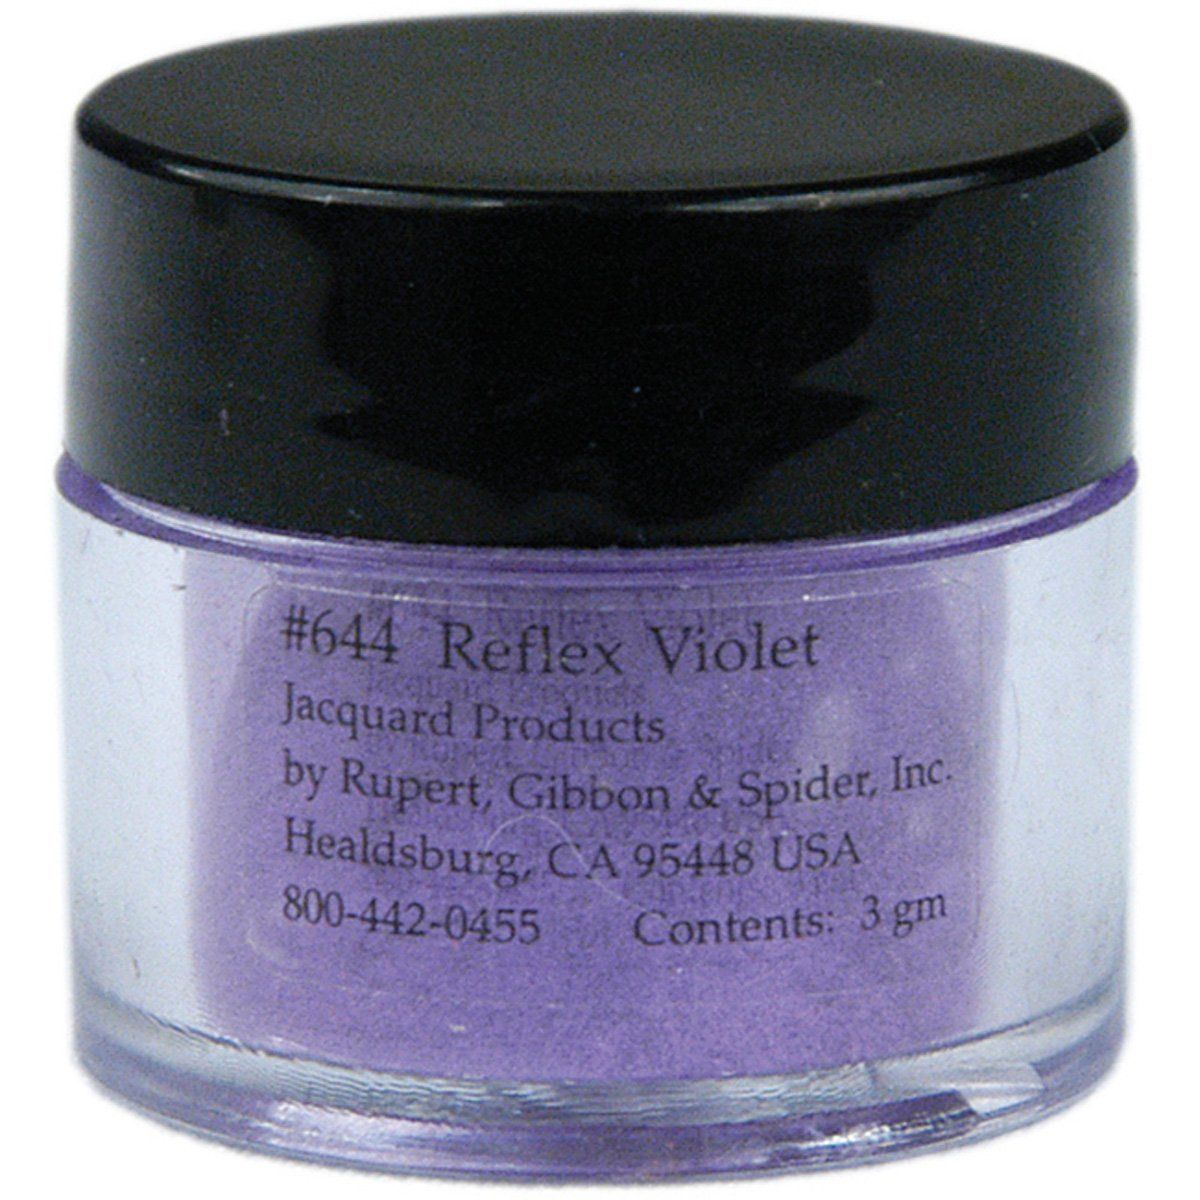 Jacquard Pearl Ex Powdered Reflex Violet Pigment 3g